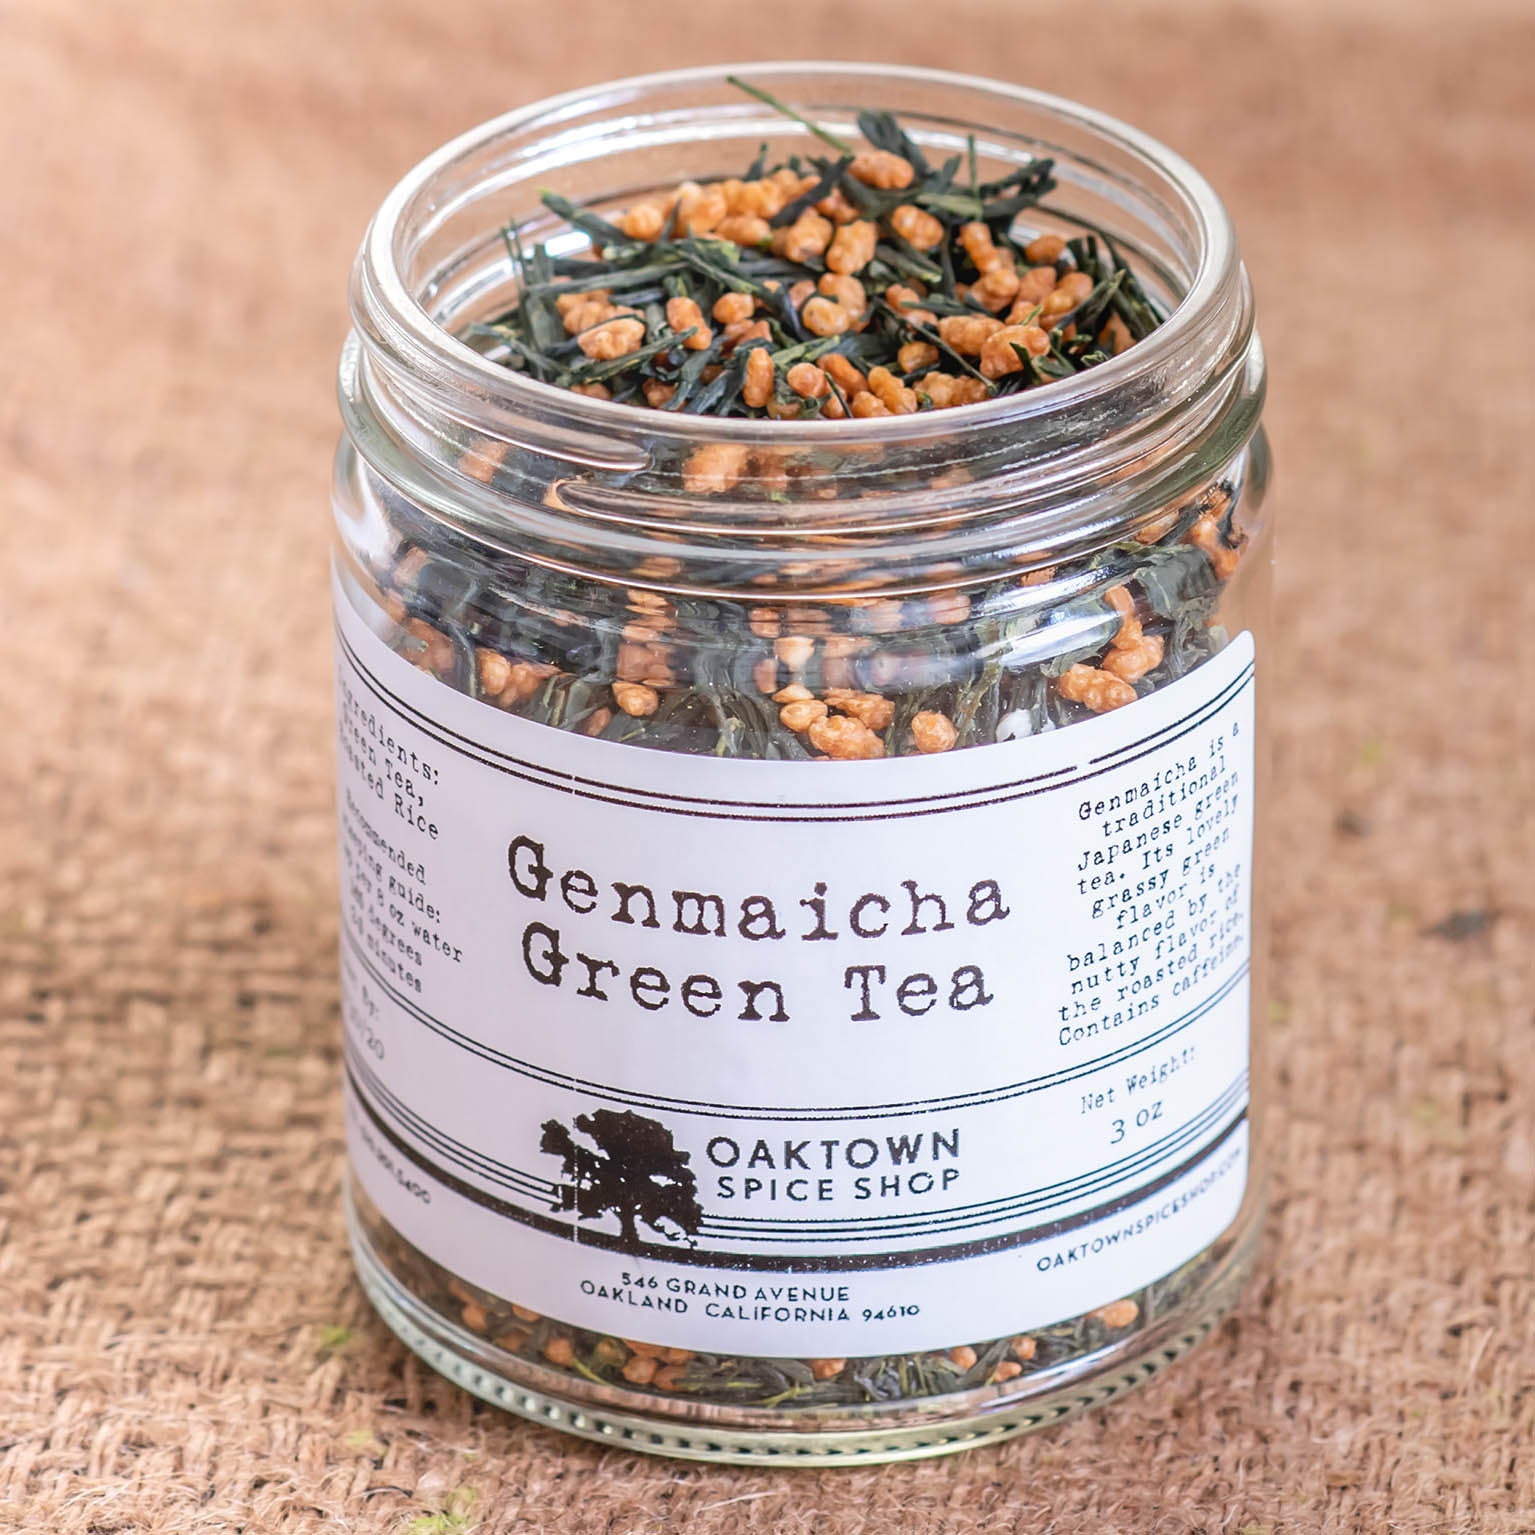 Genmaicha Green Tea from Oaktown Spice SHop is a traditional Japanese green tea.